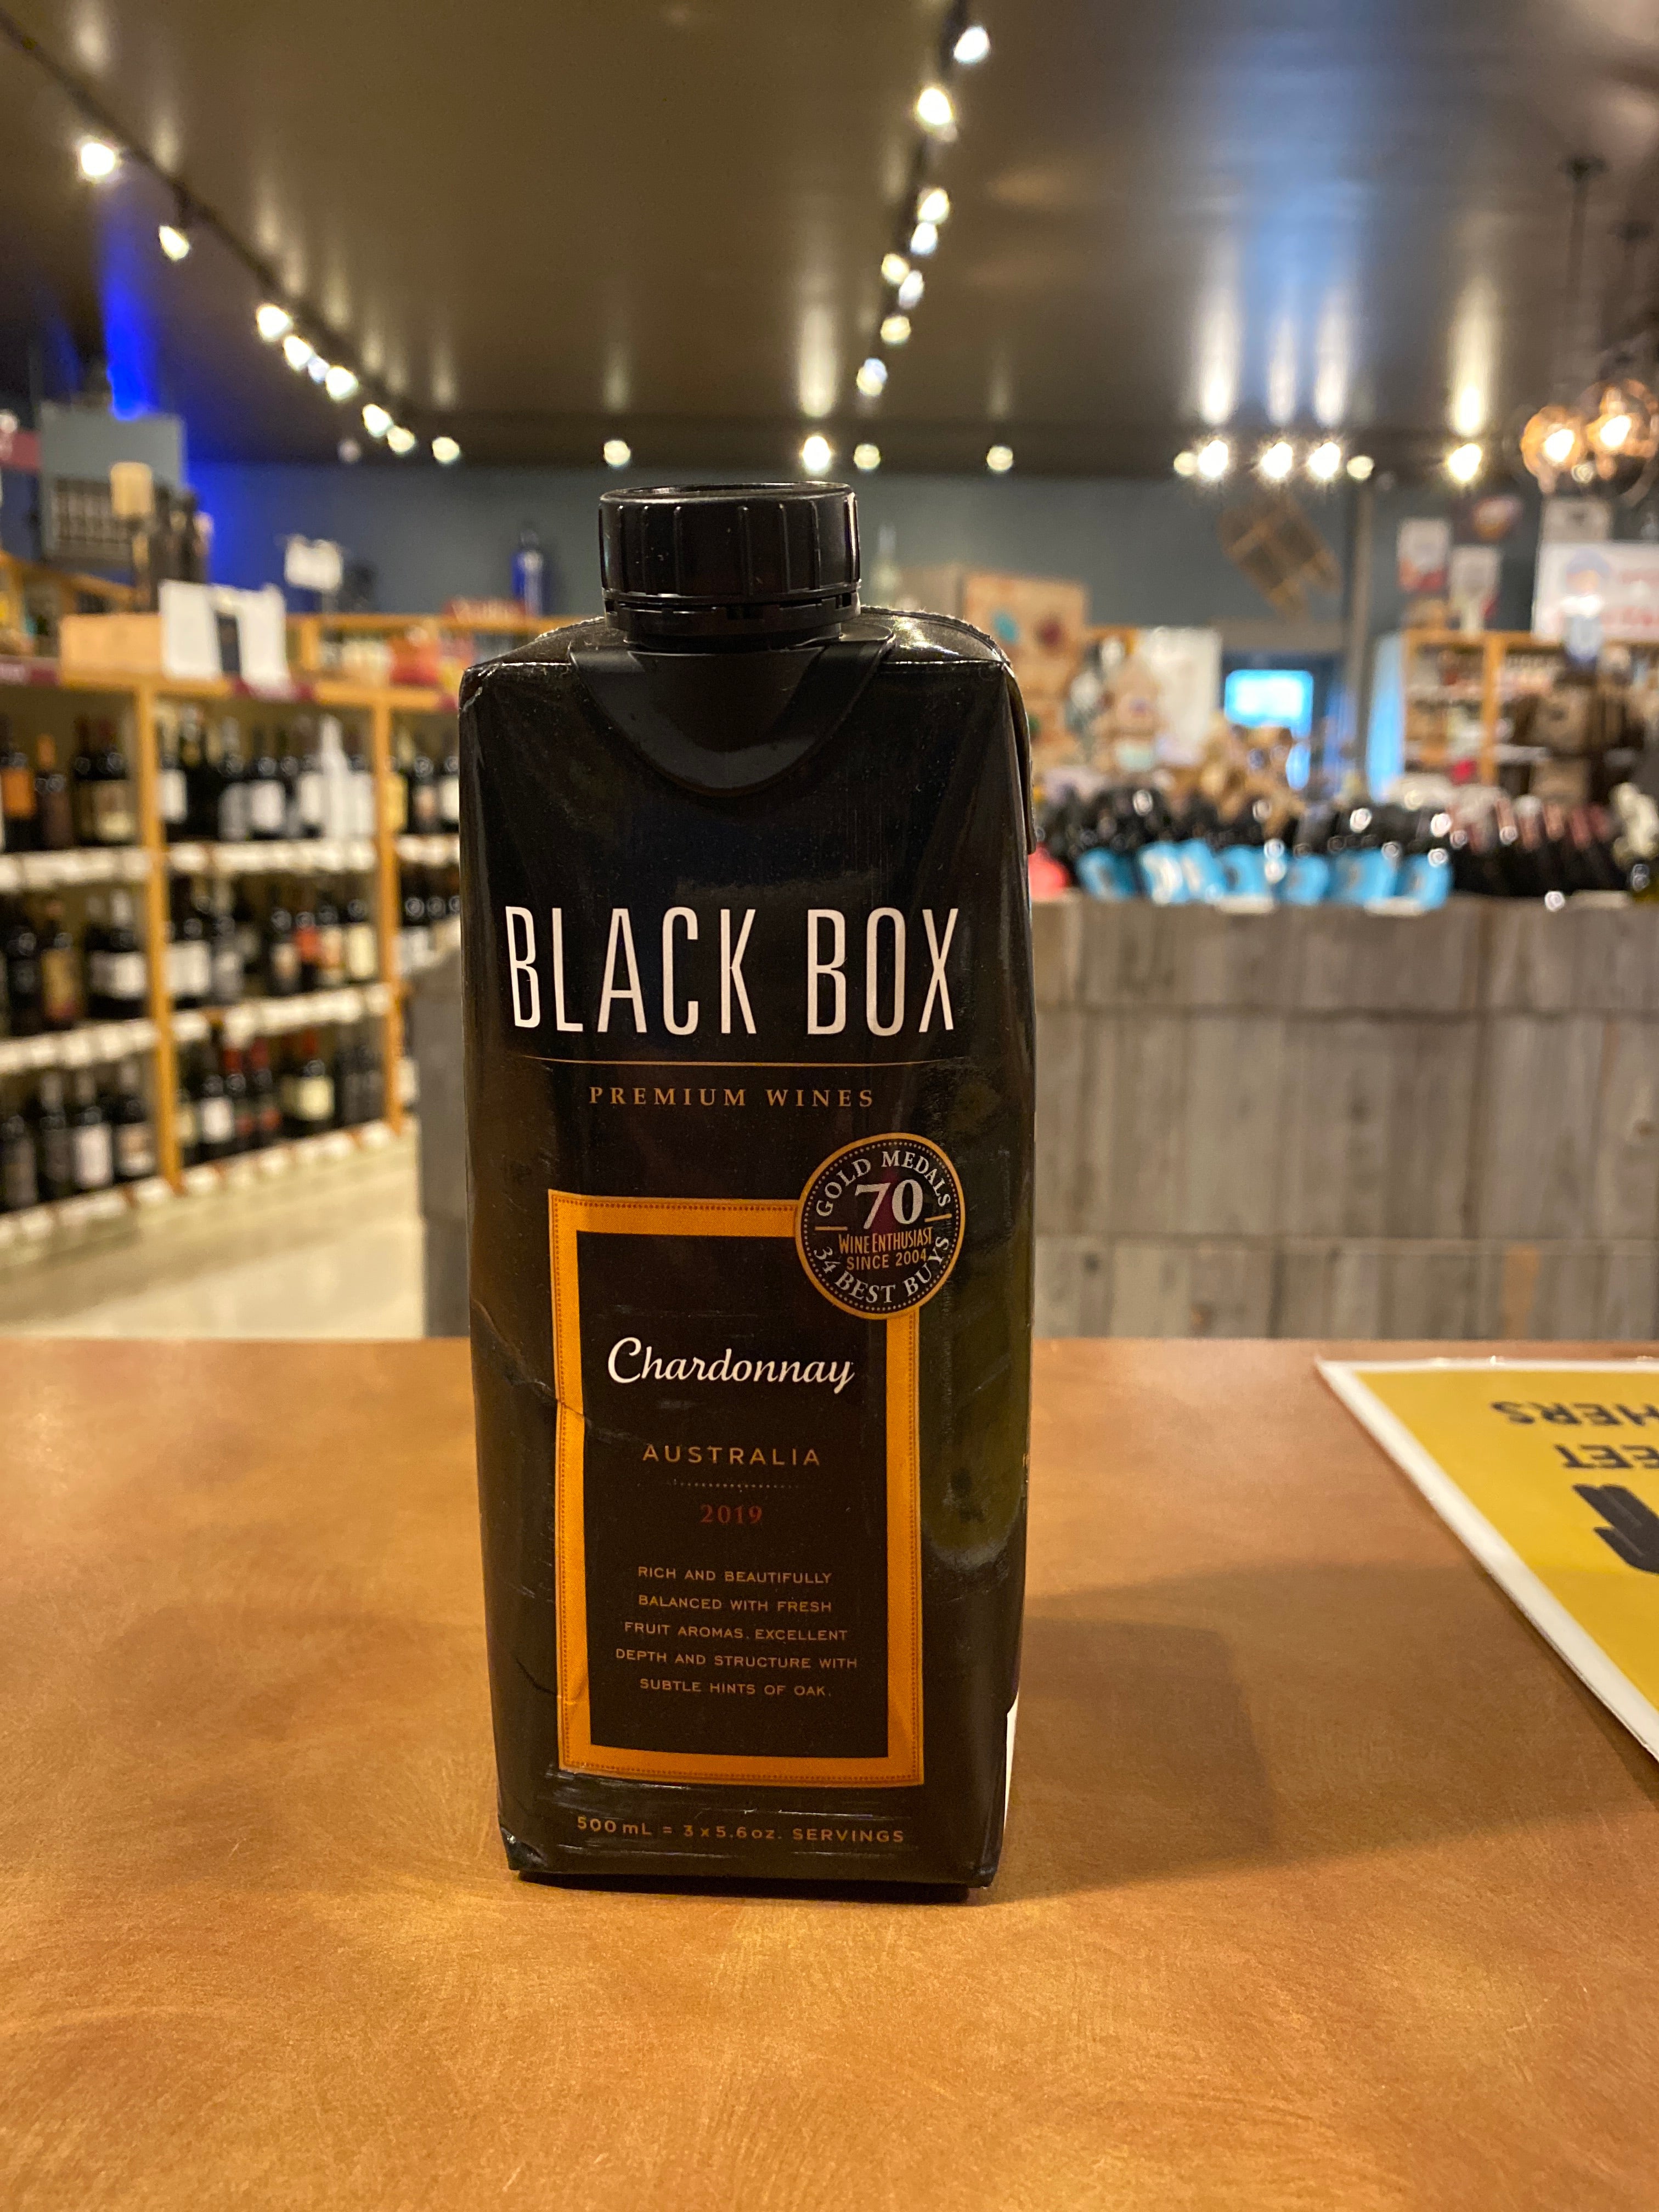 black-box-chardonnay-boxed-wine-rtd-500ml-o-brien-s-liquor-wine